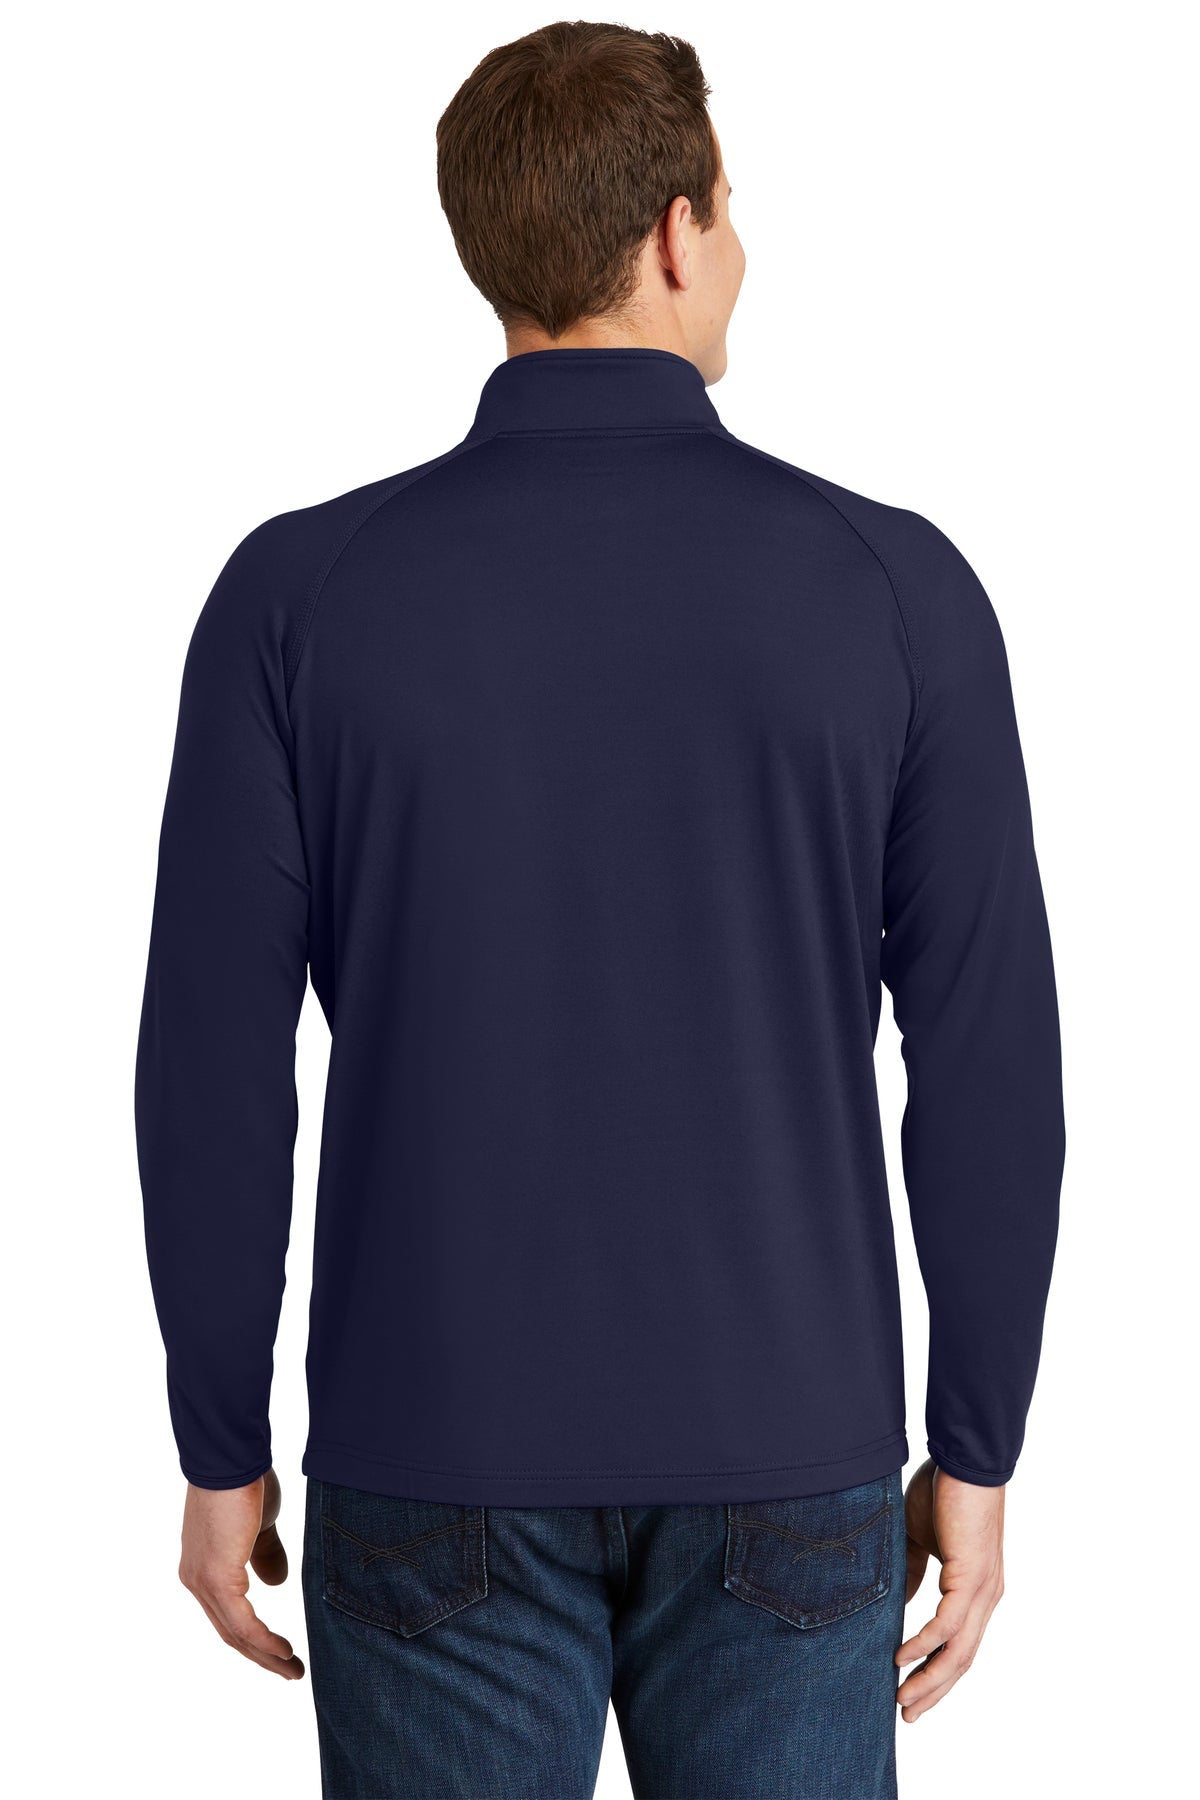 sport-tek_st850 _true navy_company_logo_sweatshirts